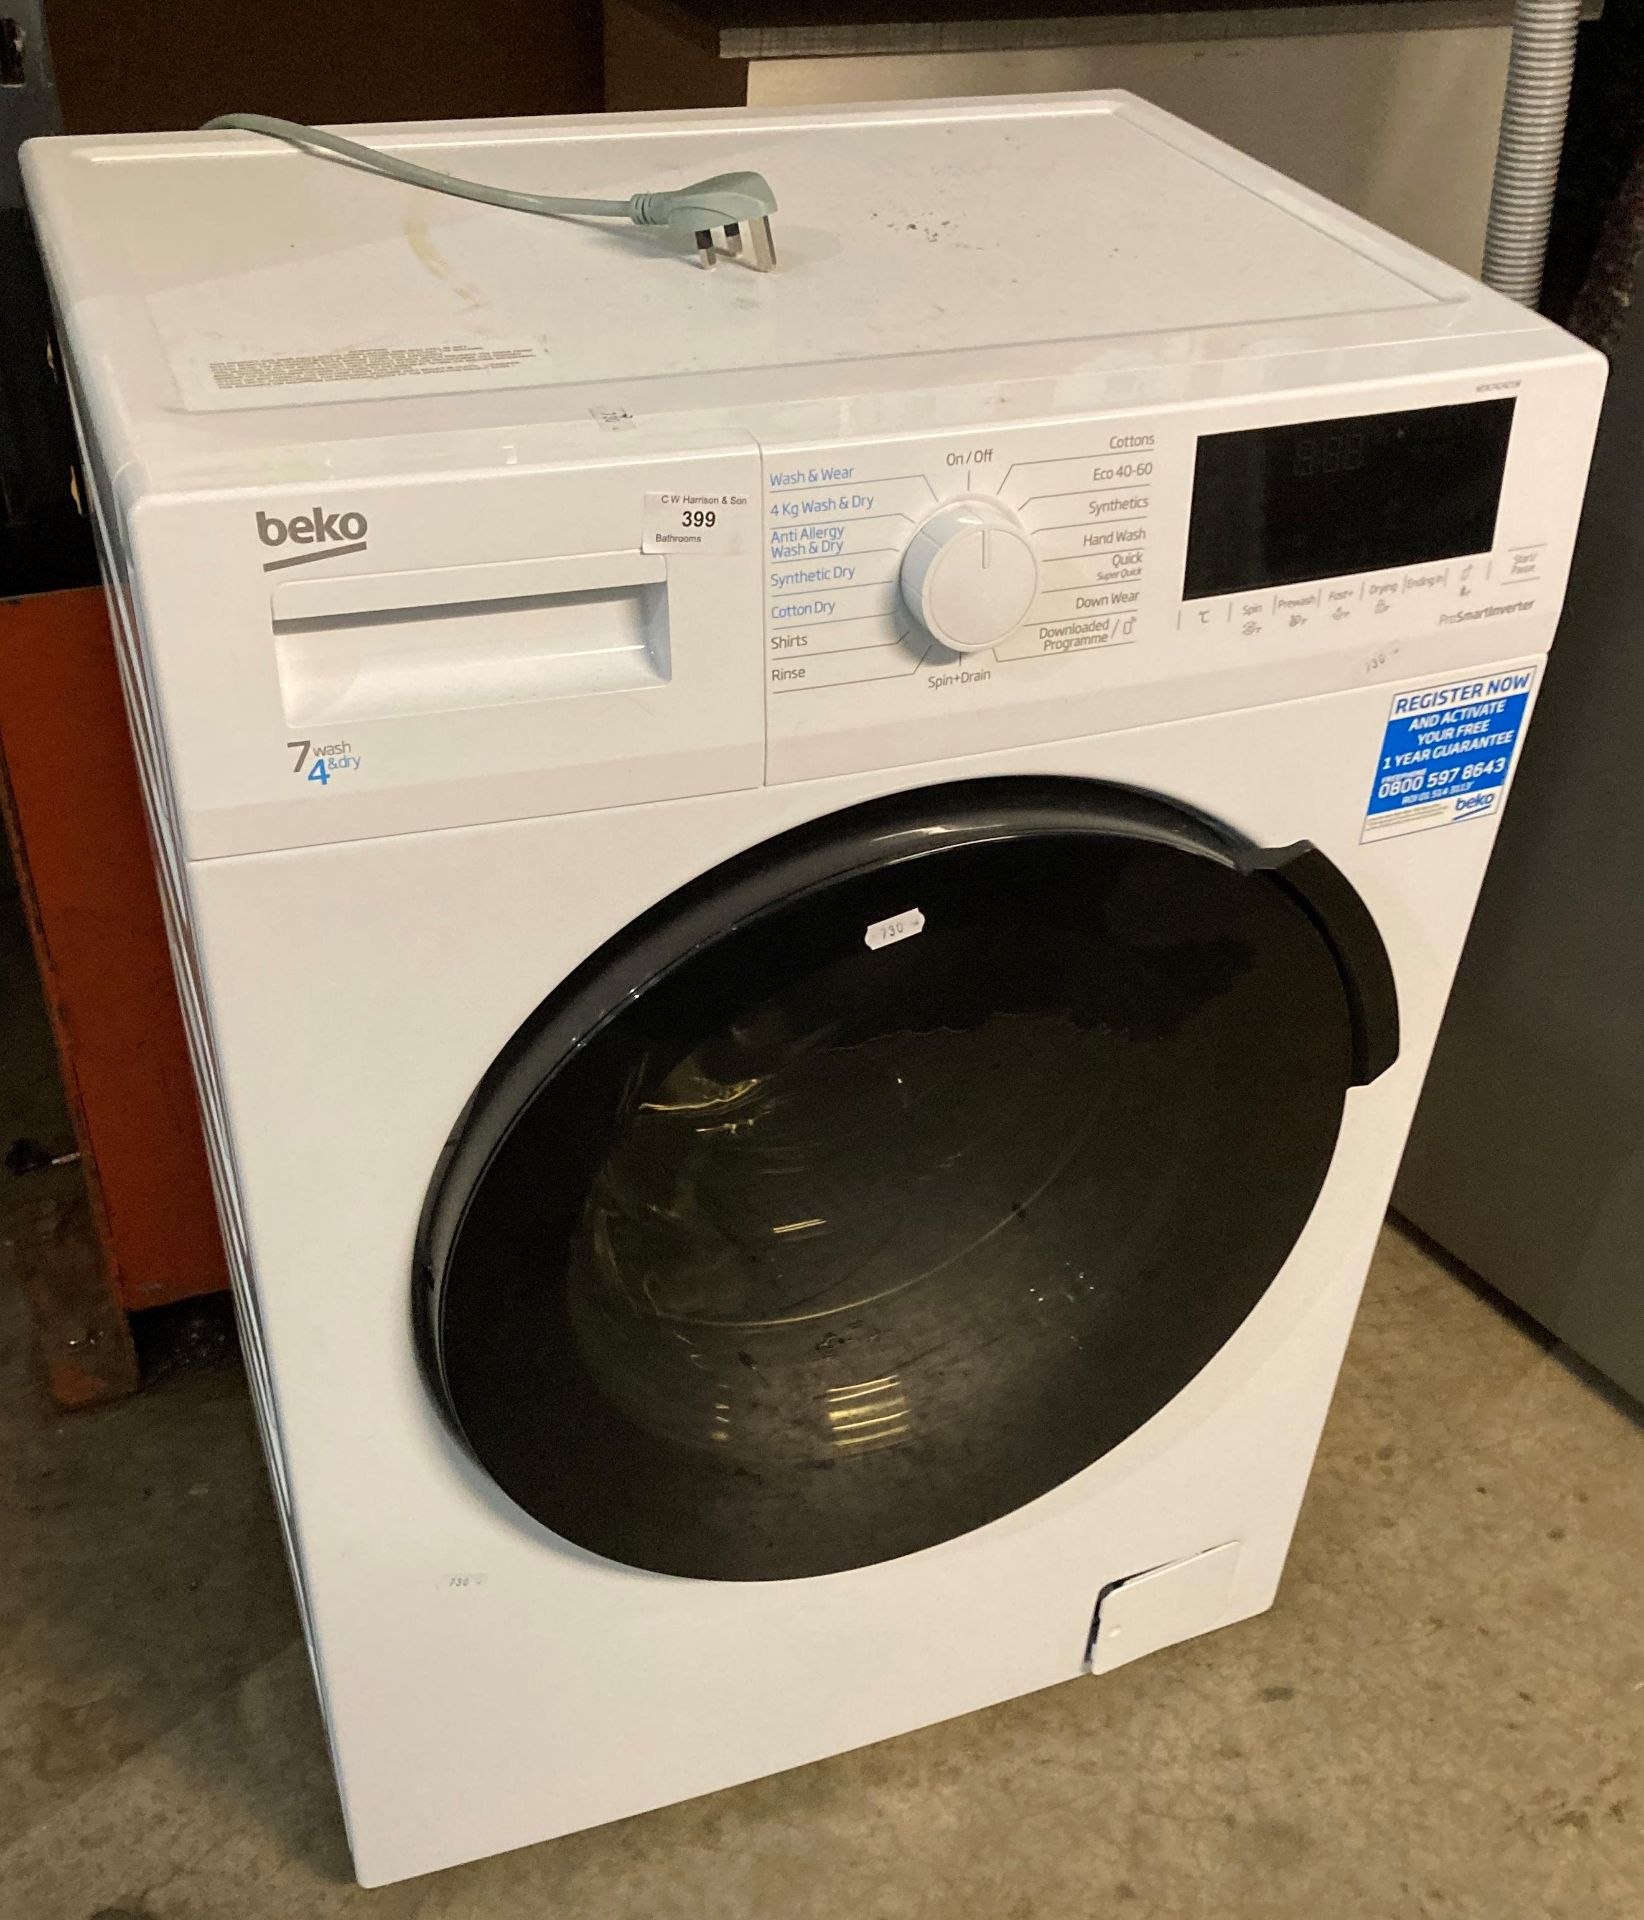 Beko Prosmartinverter automatic washing machine model WDK742421W (saleroom location: PO)